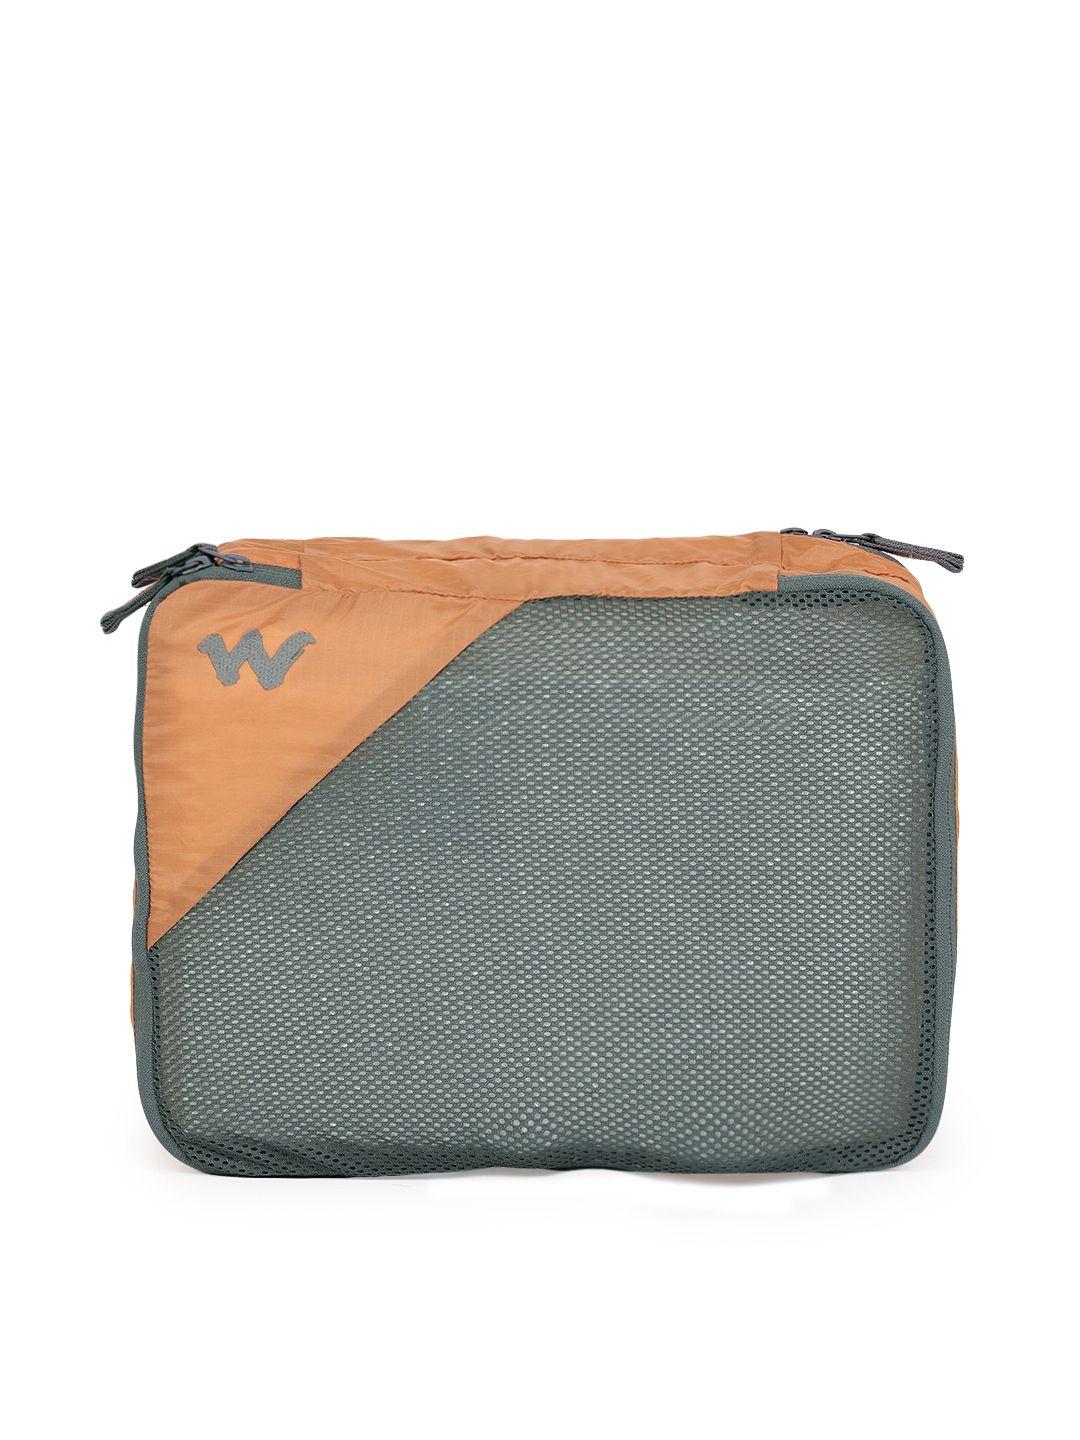 wildcraft unisex orange & grey 2 compartment travel cube